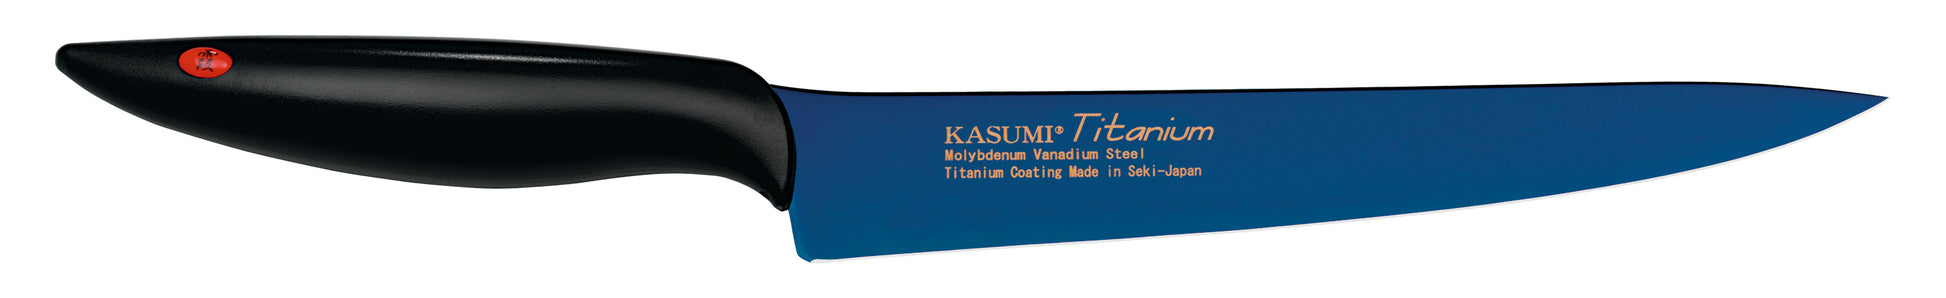 Kasumi Coltello da arrosto Titanio Cm.20 K-20020B